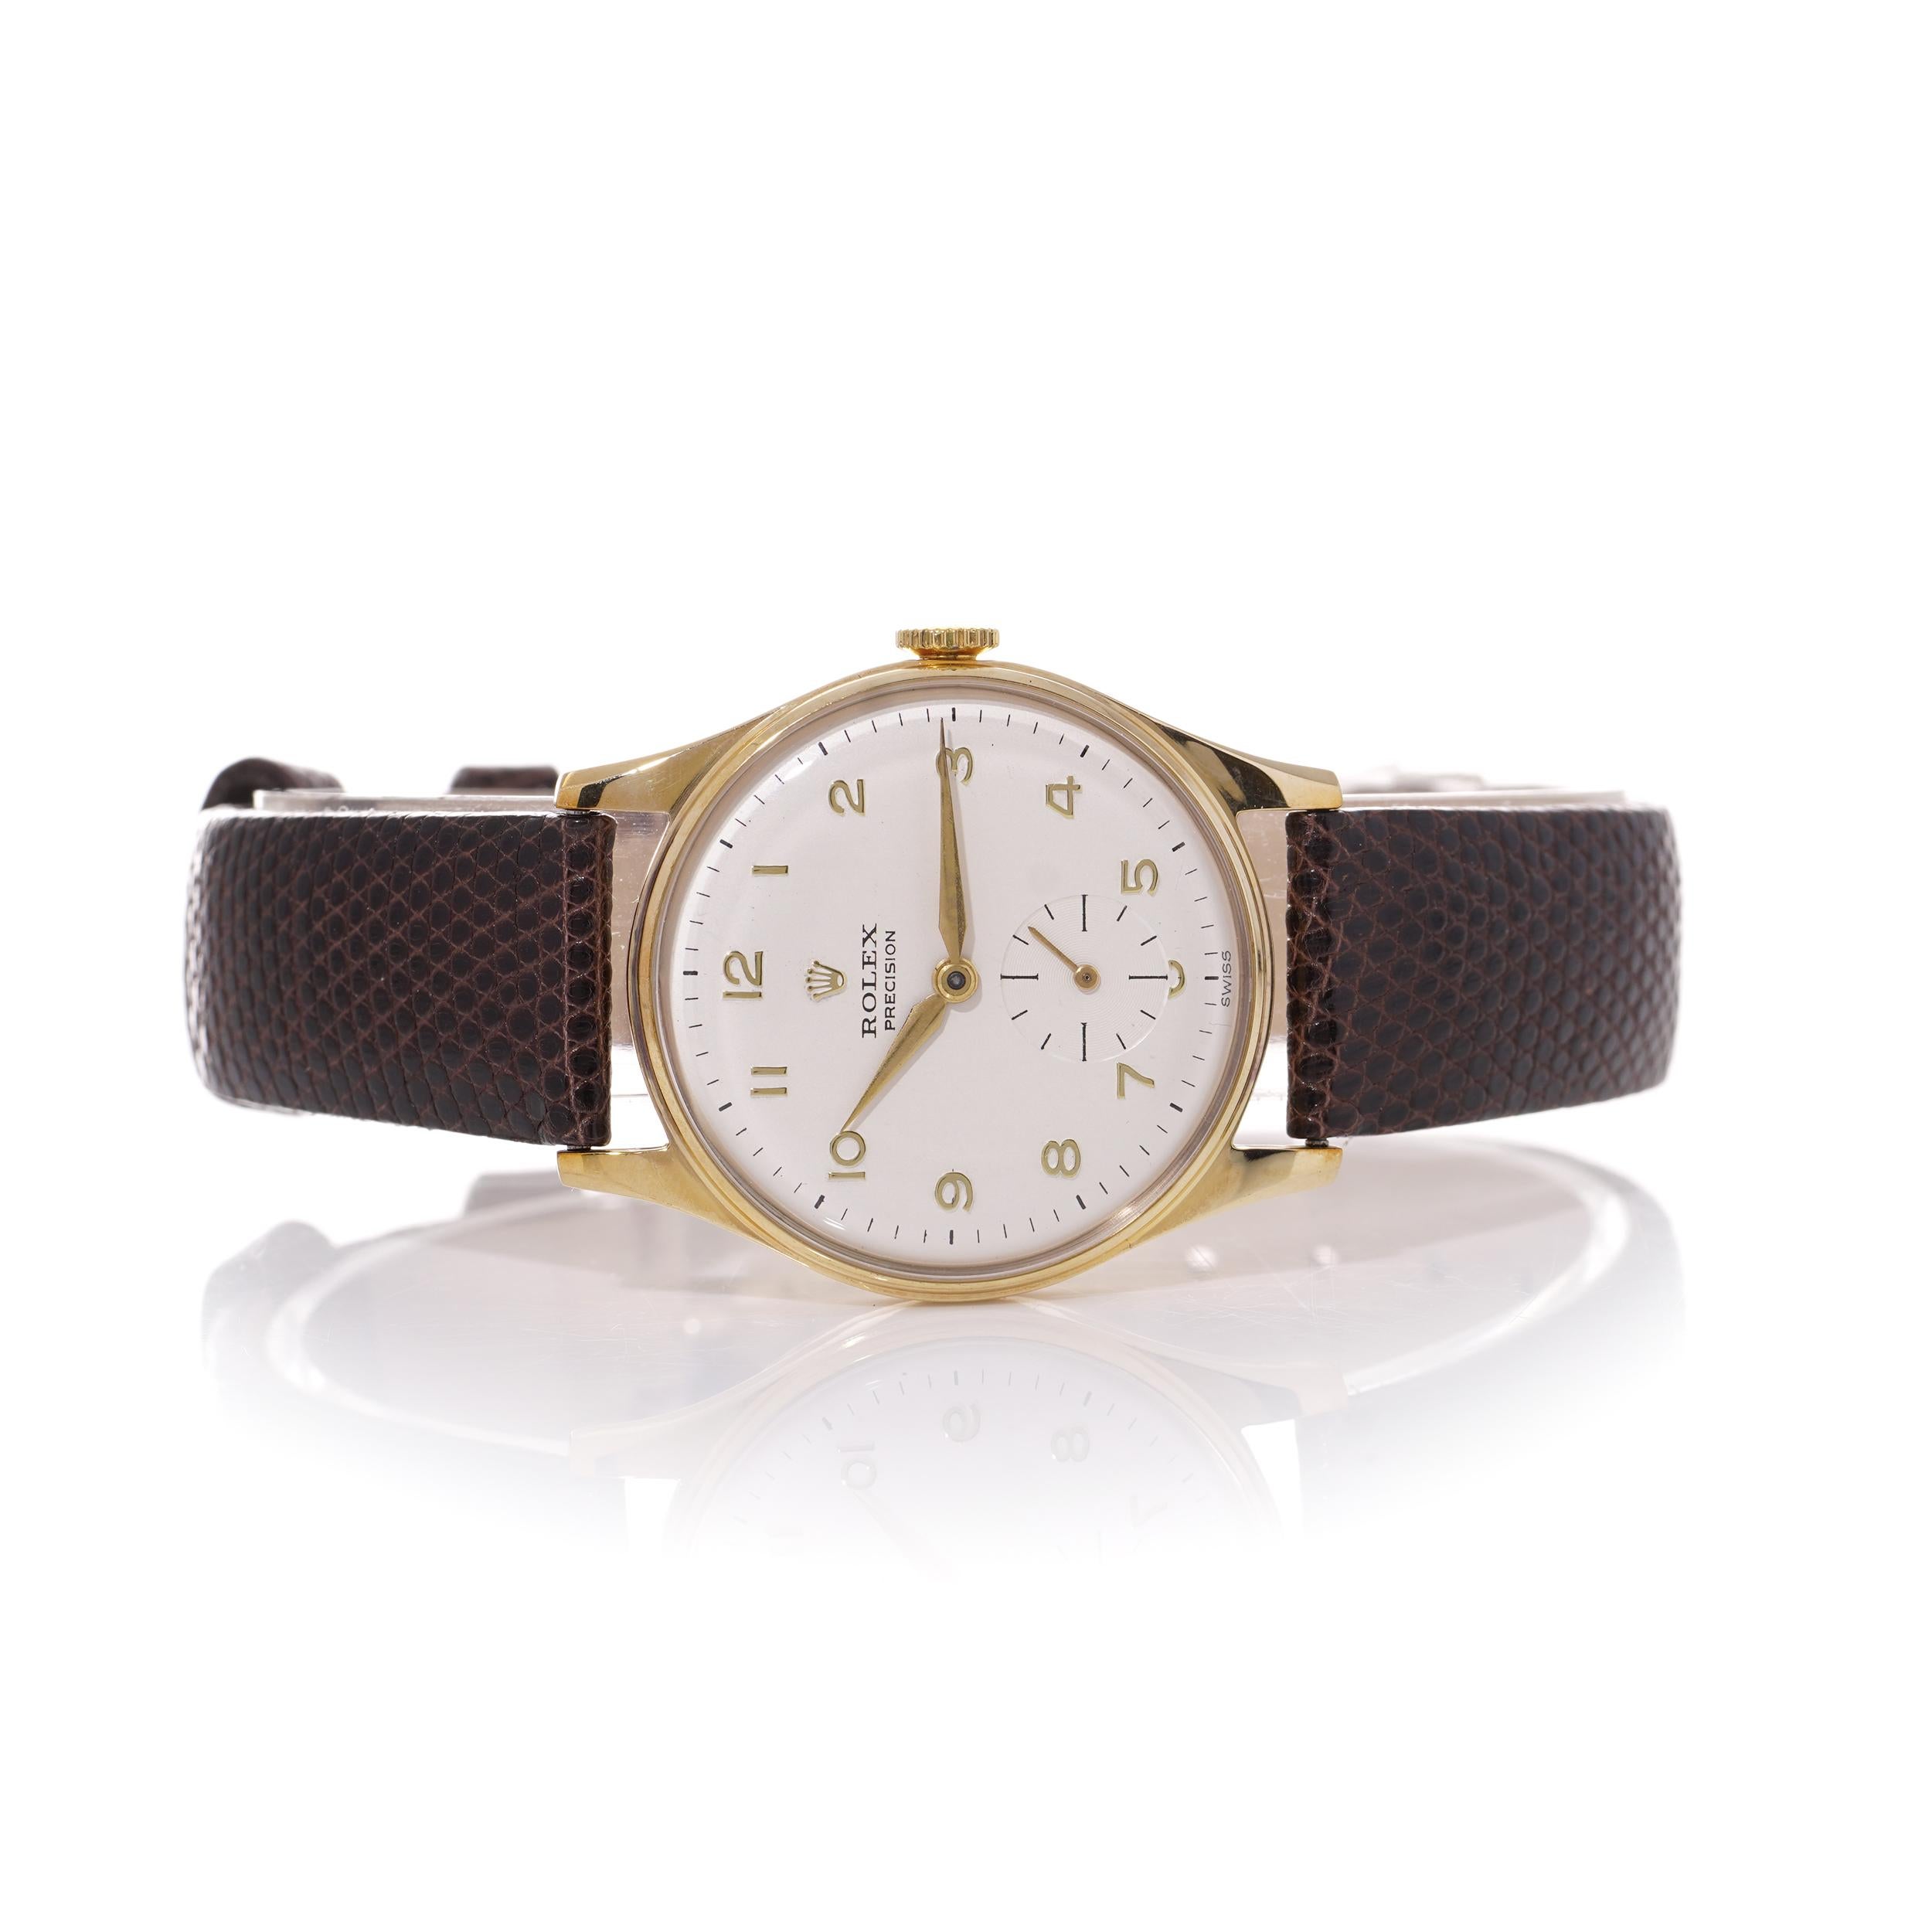 Rolex Precision 9kt. gold men's manual winding wristwatch with Dennison case  2